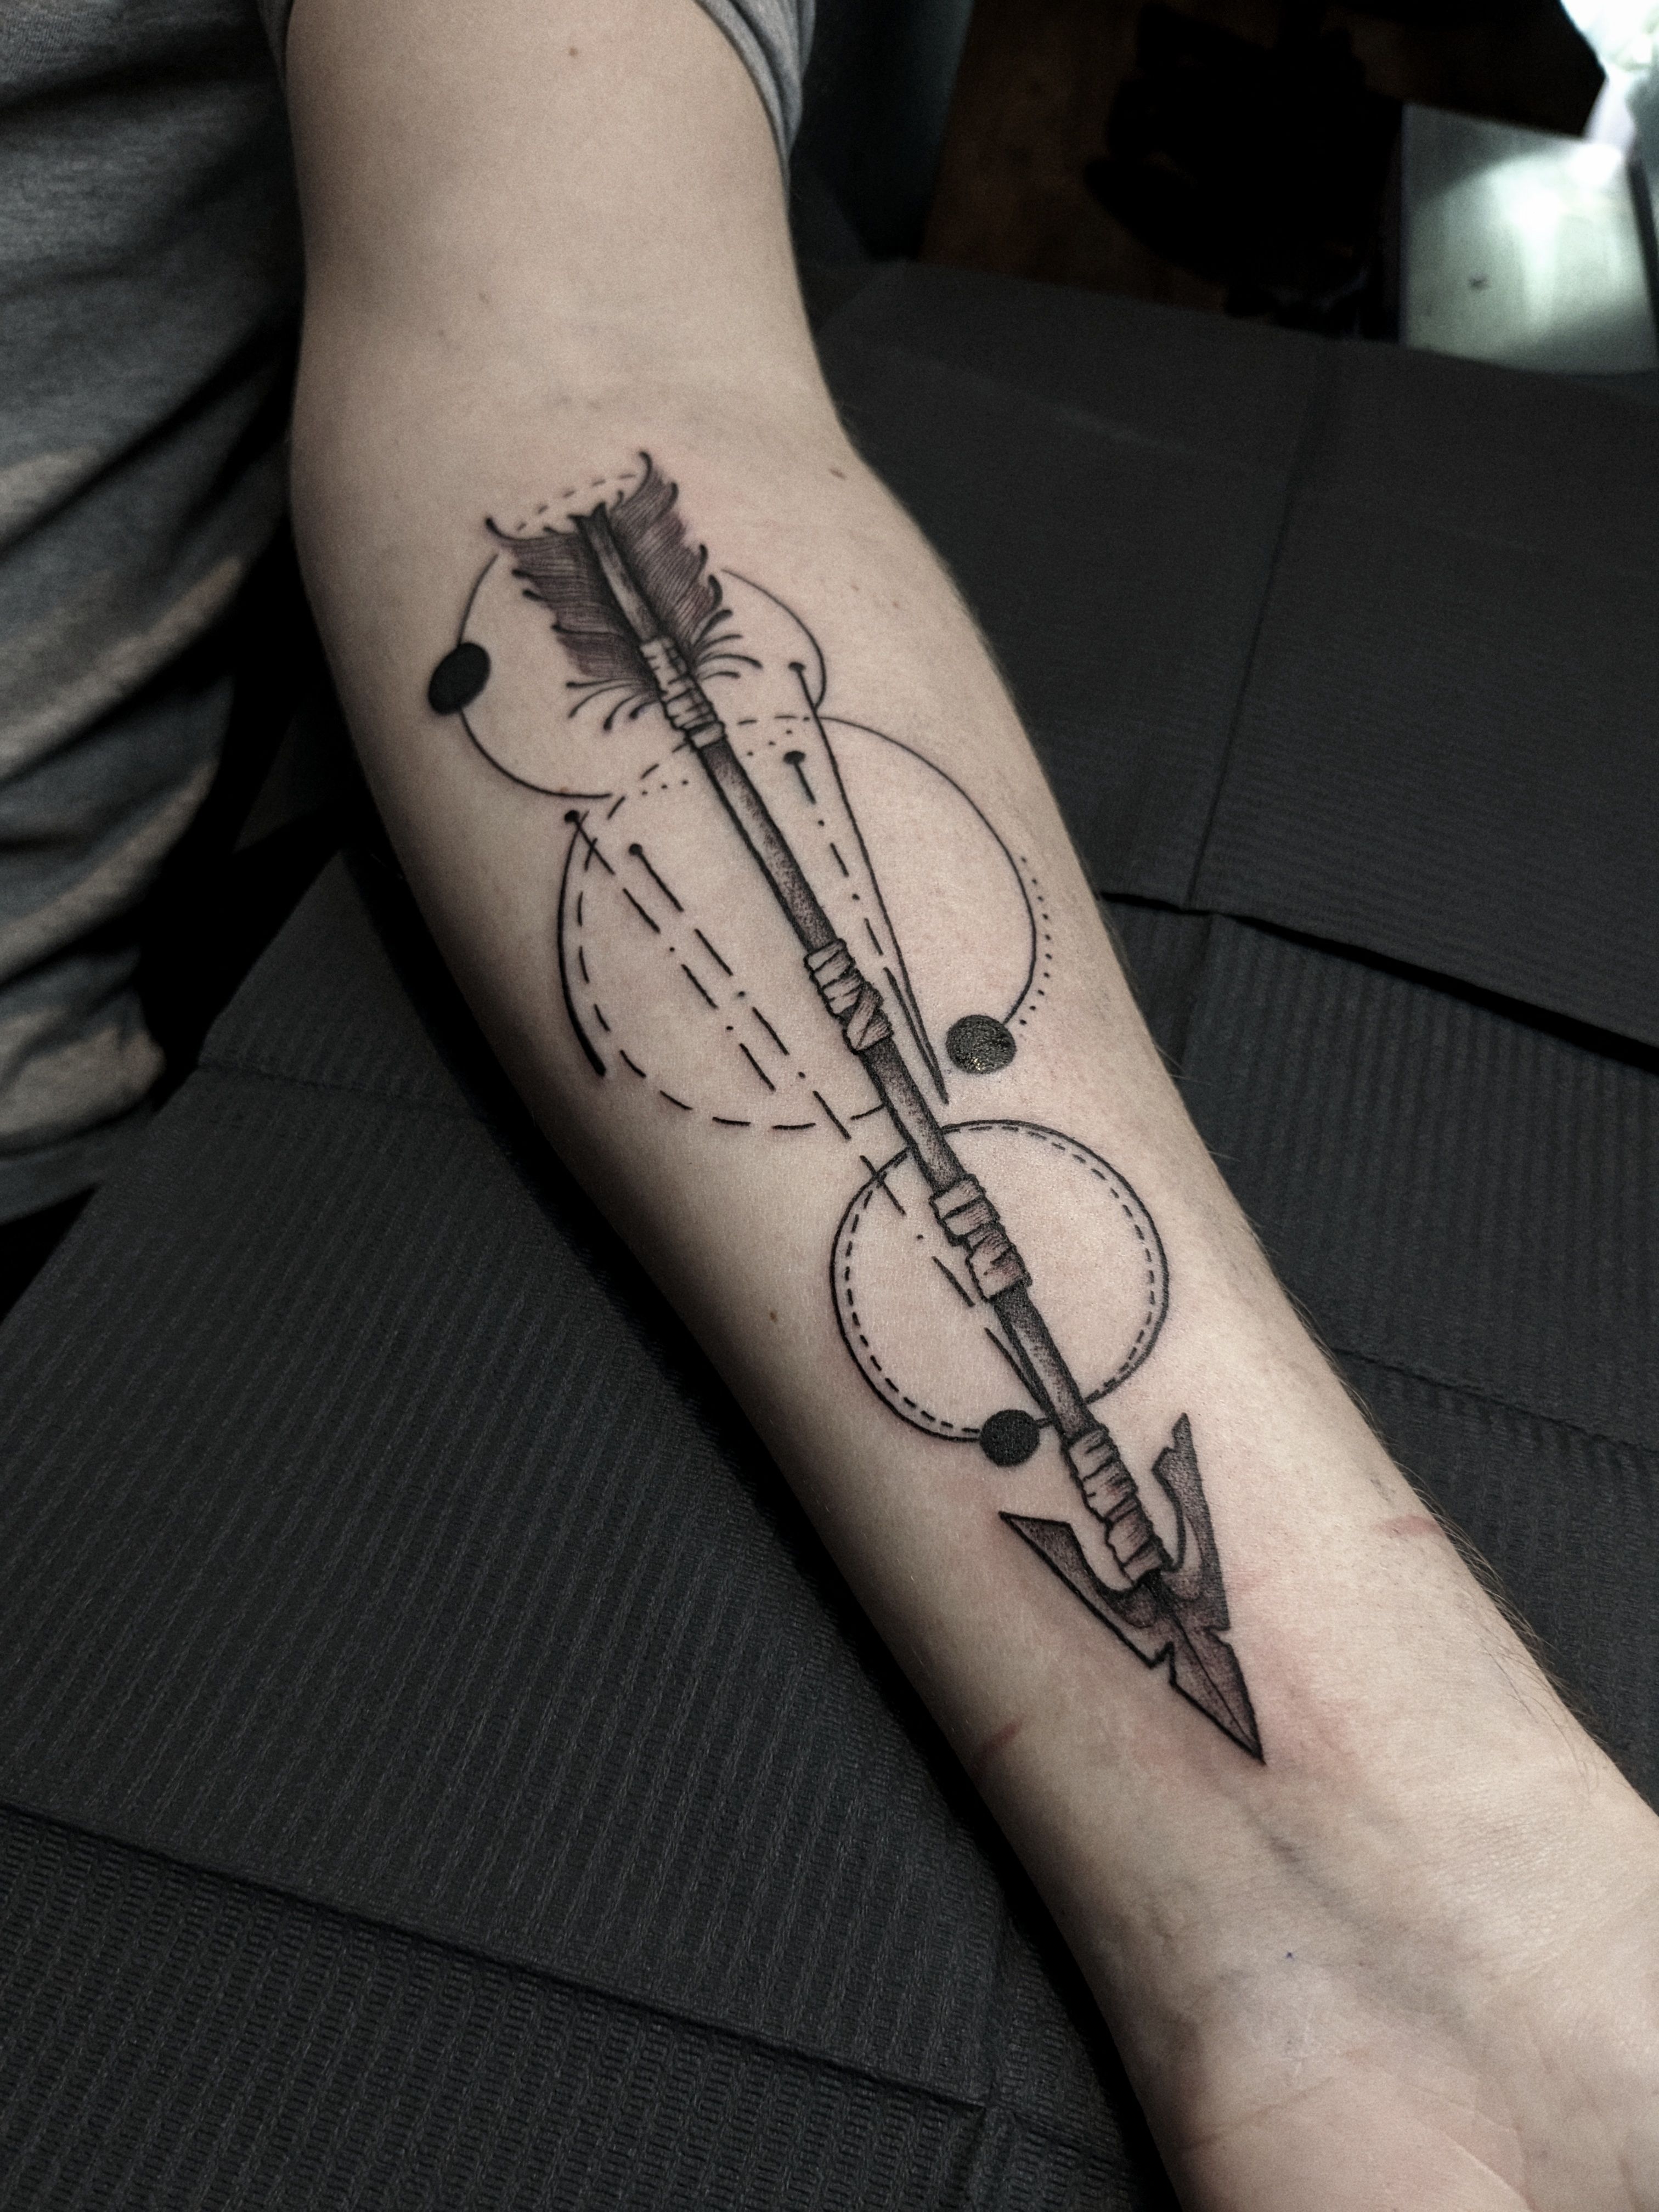 Arrow Tattoo on Forearm - Best Tattoo Ideas Gallery